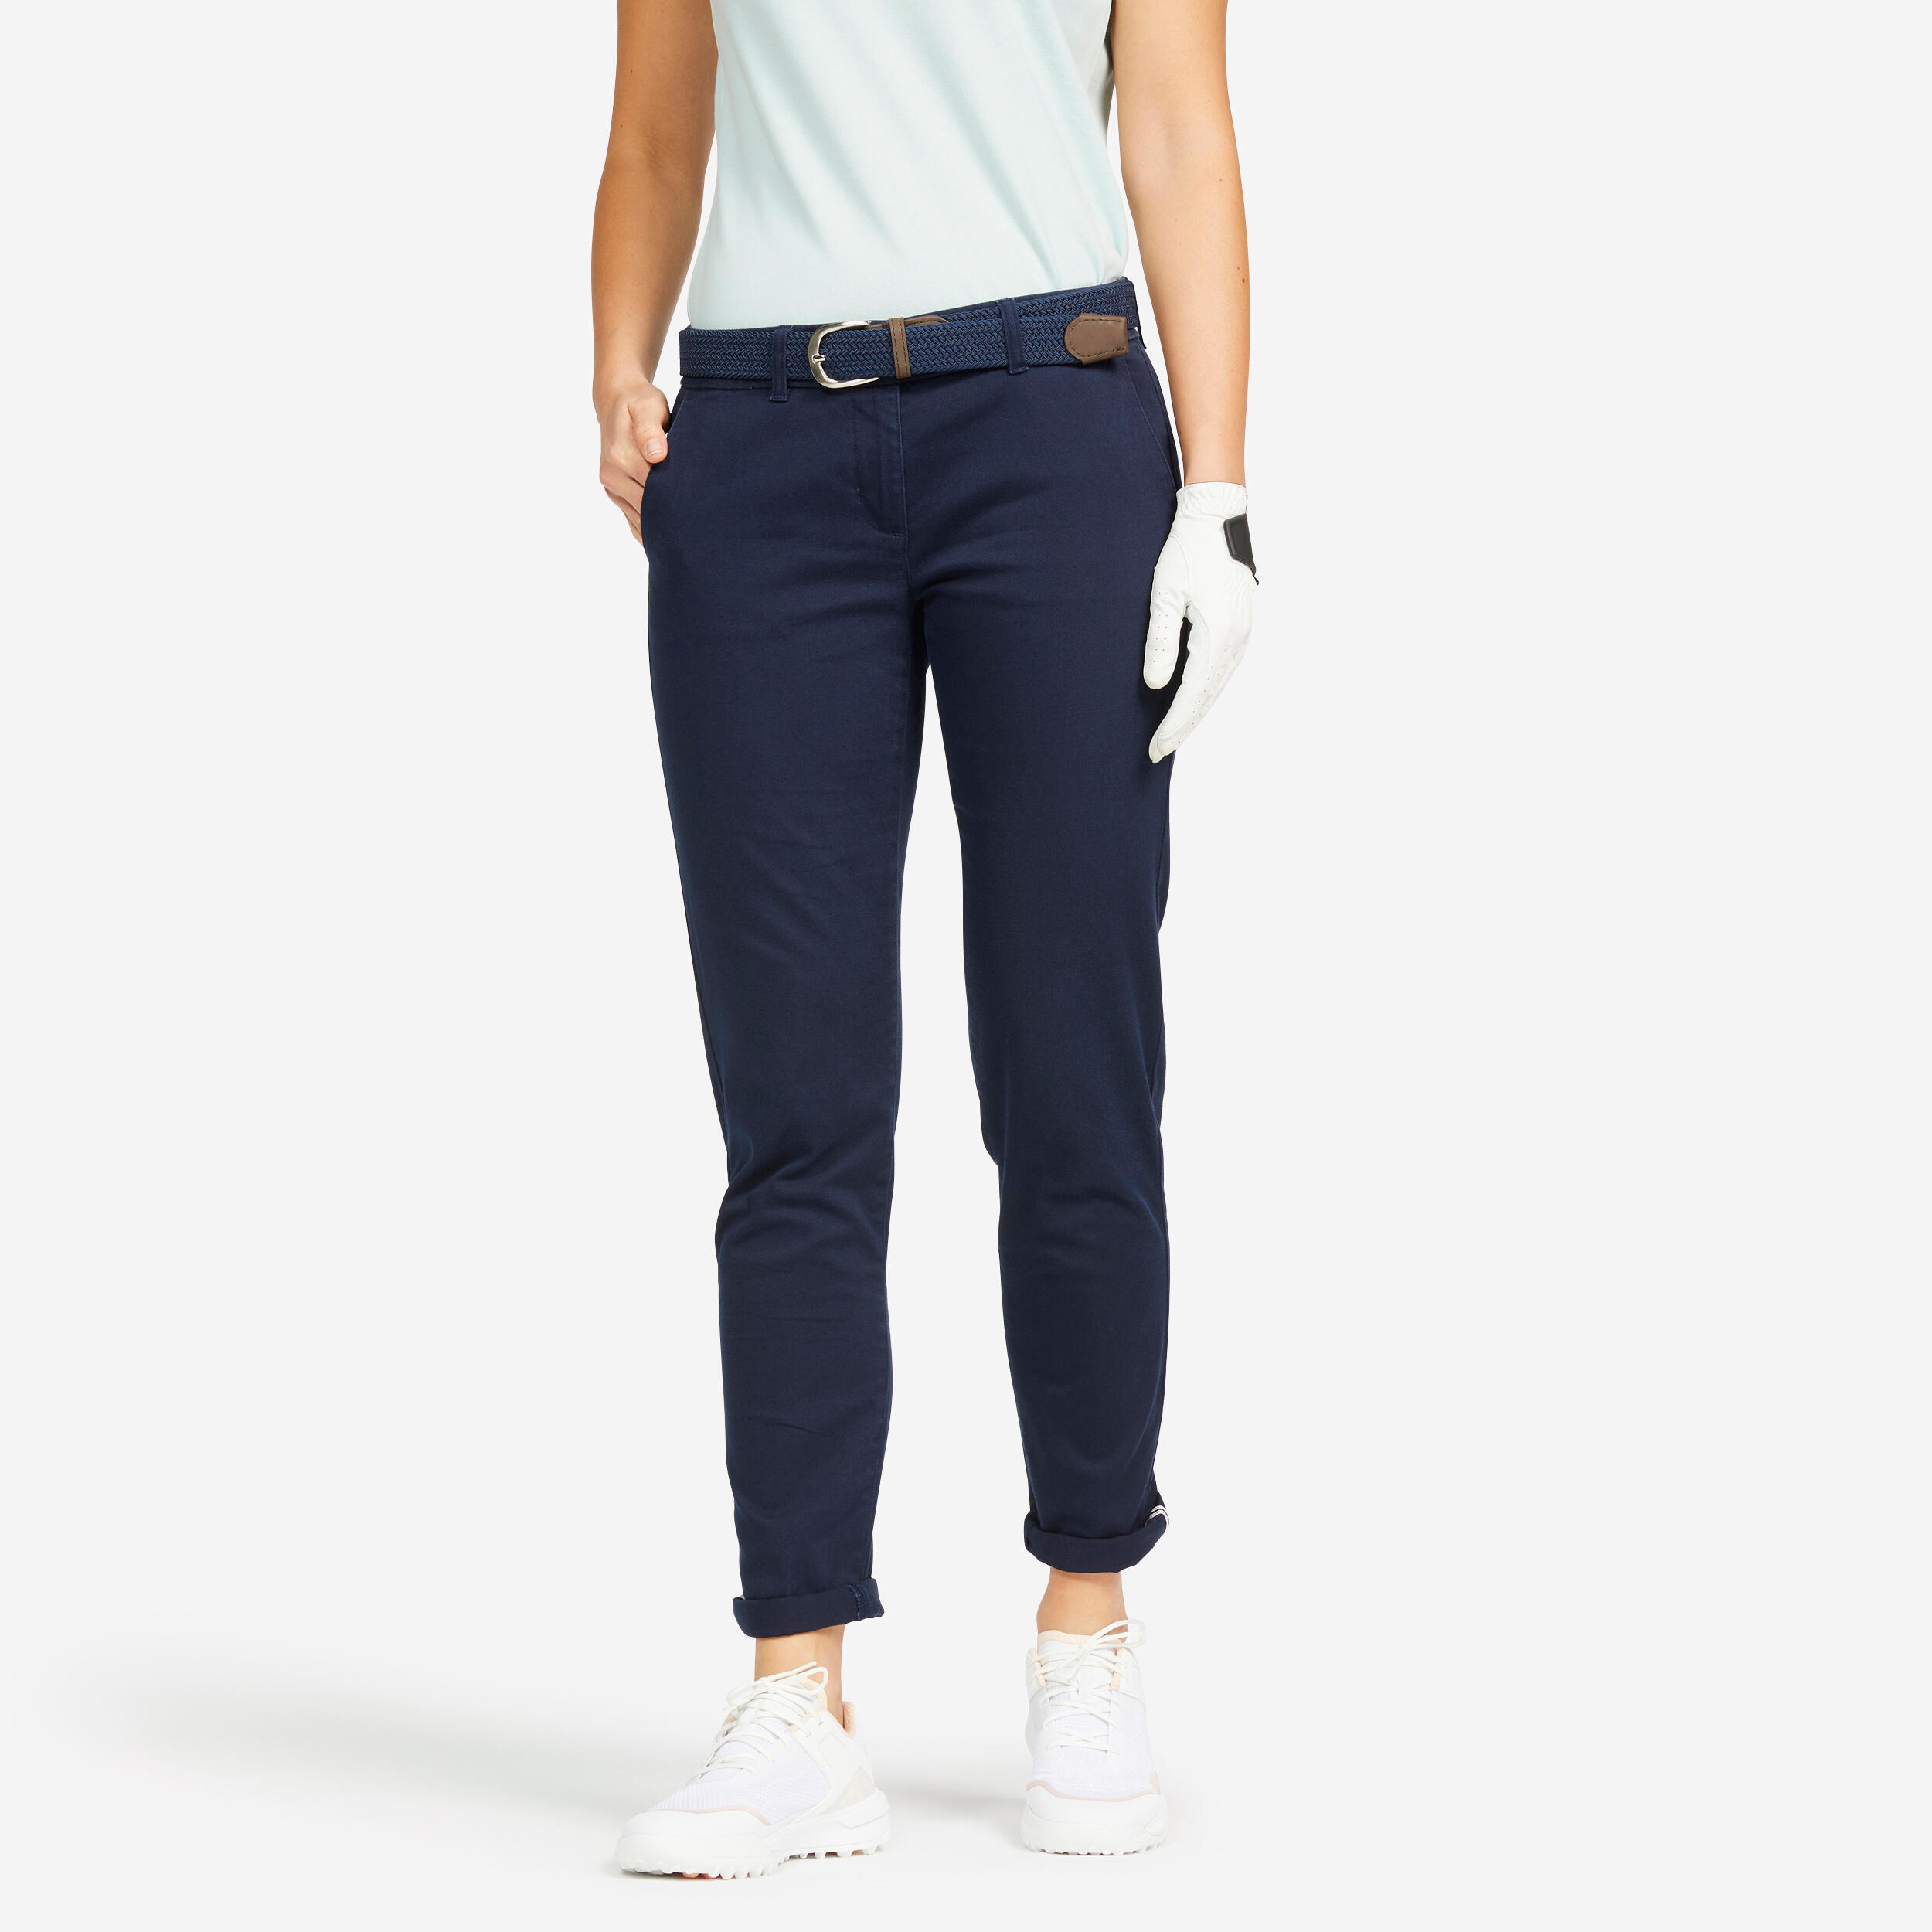 Mens Very Lightweight Golf Trousers Bottoms Pants Semi Slim Cut Ww500 Inesis  | eBay